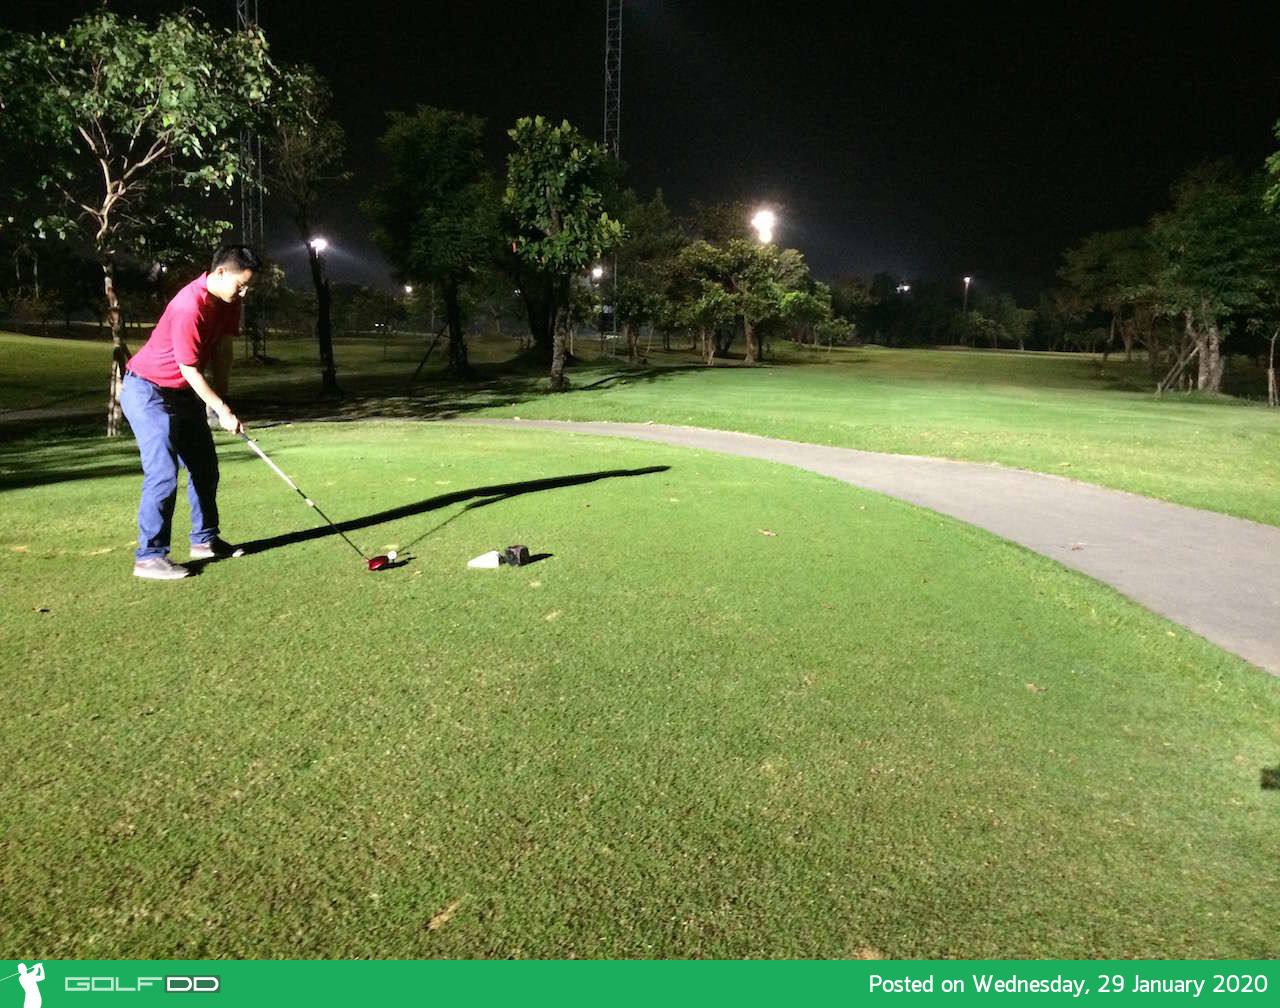 Bangkok Golf Club โดดเด่นด้วยแฟร์เวย์และกรีน อีกหนึ่งสนามเมืองปทุมธานีที่ต้องมาโดน 